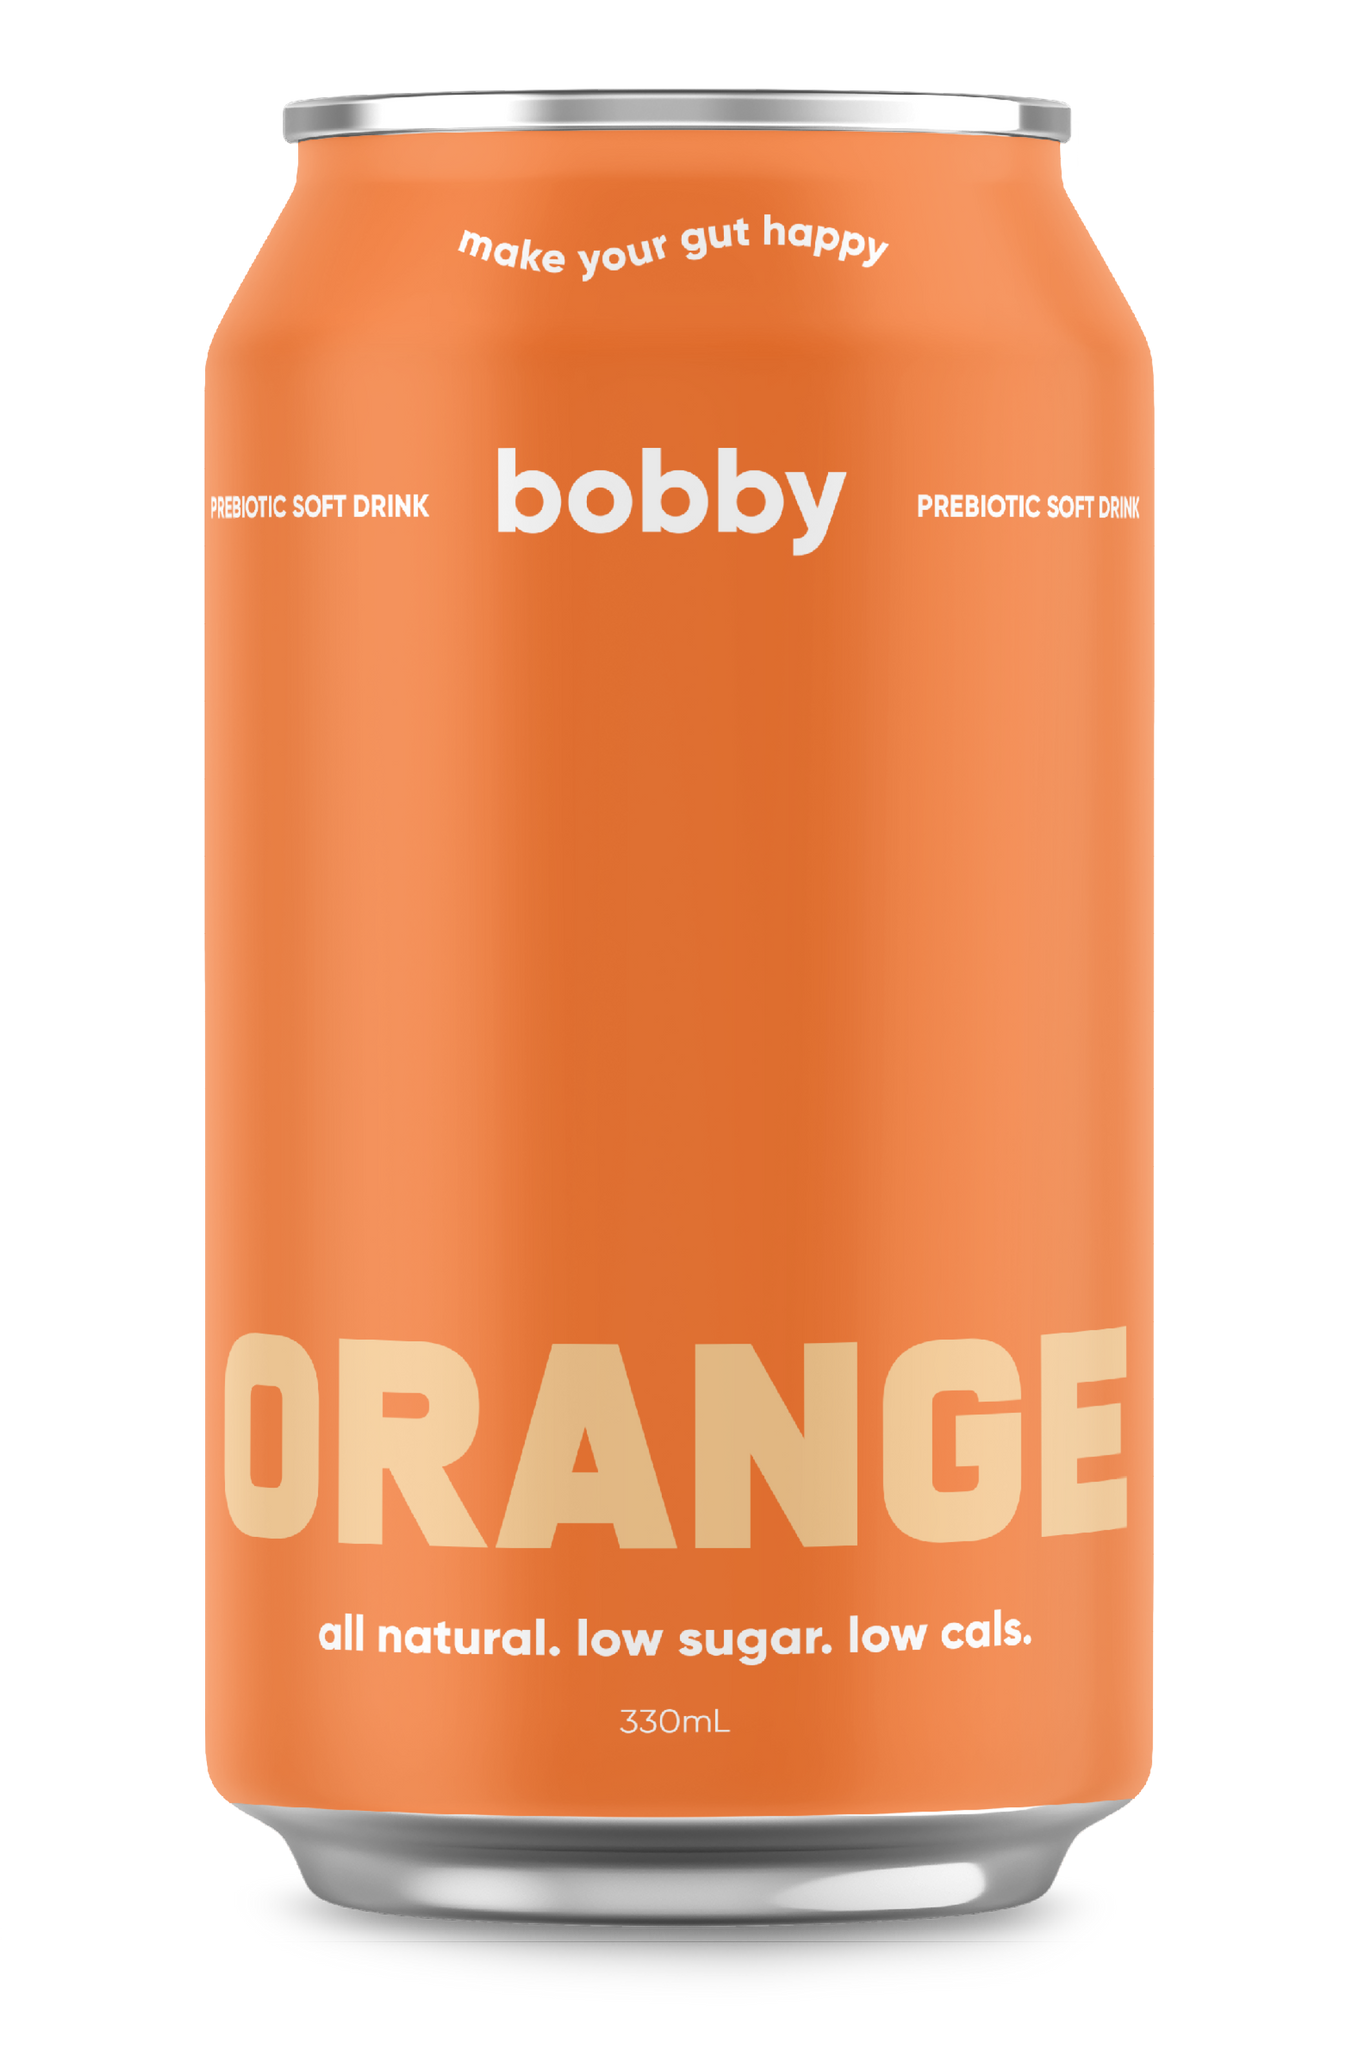 Fanta orange flavoured soda, all natural low sugar and low calories